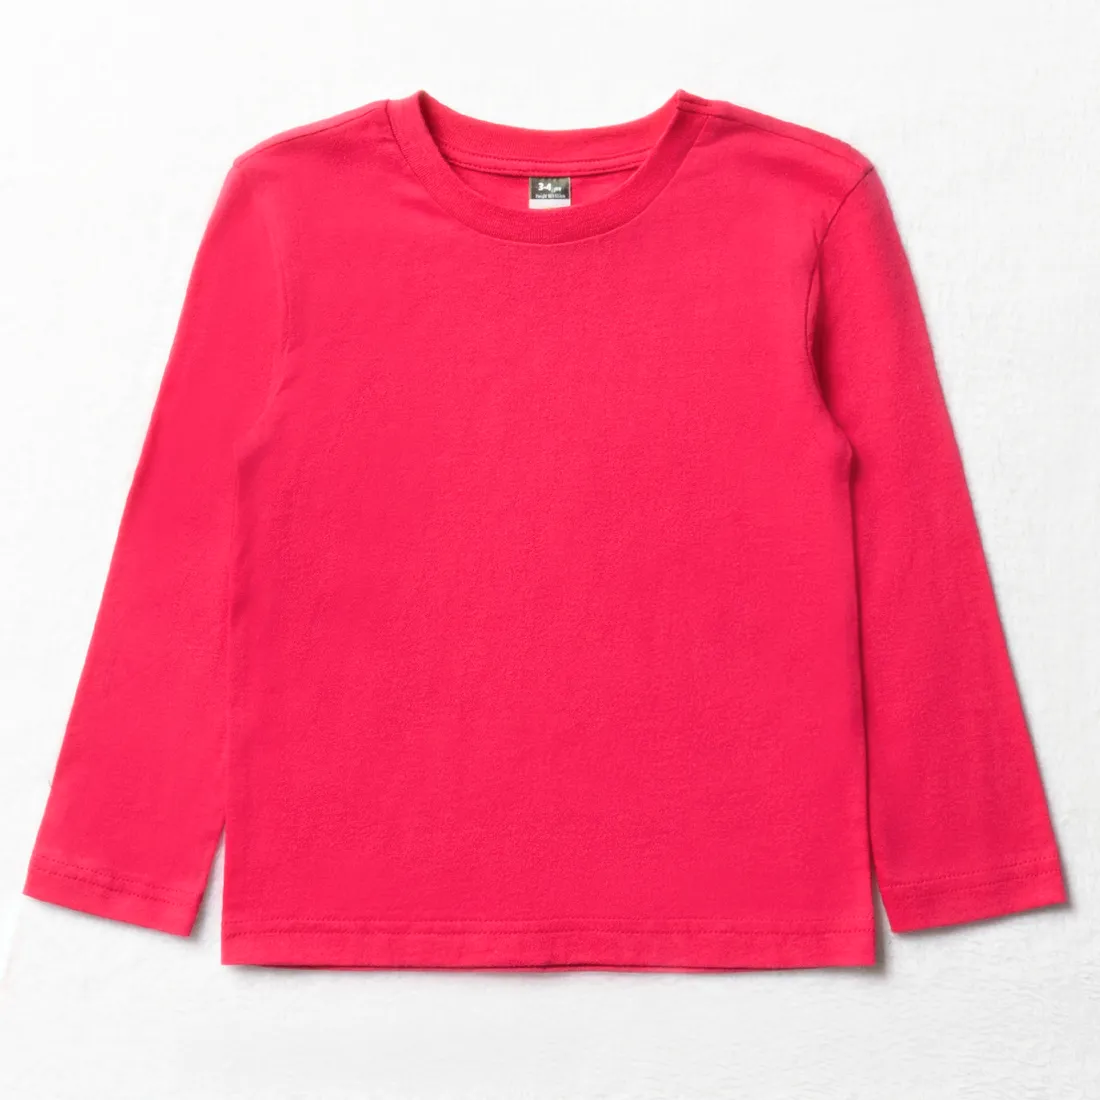 Long sleeve t-shirt pink - BOYS 2-8 YEARS Tops & T-Shirts | Ackermans